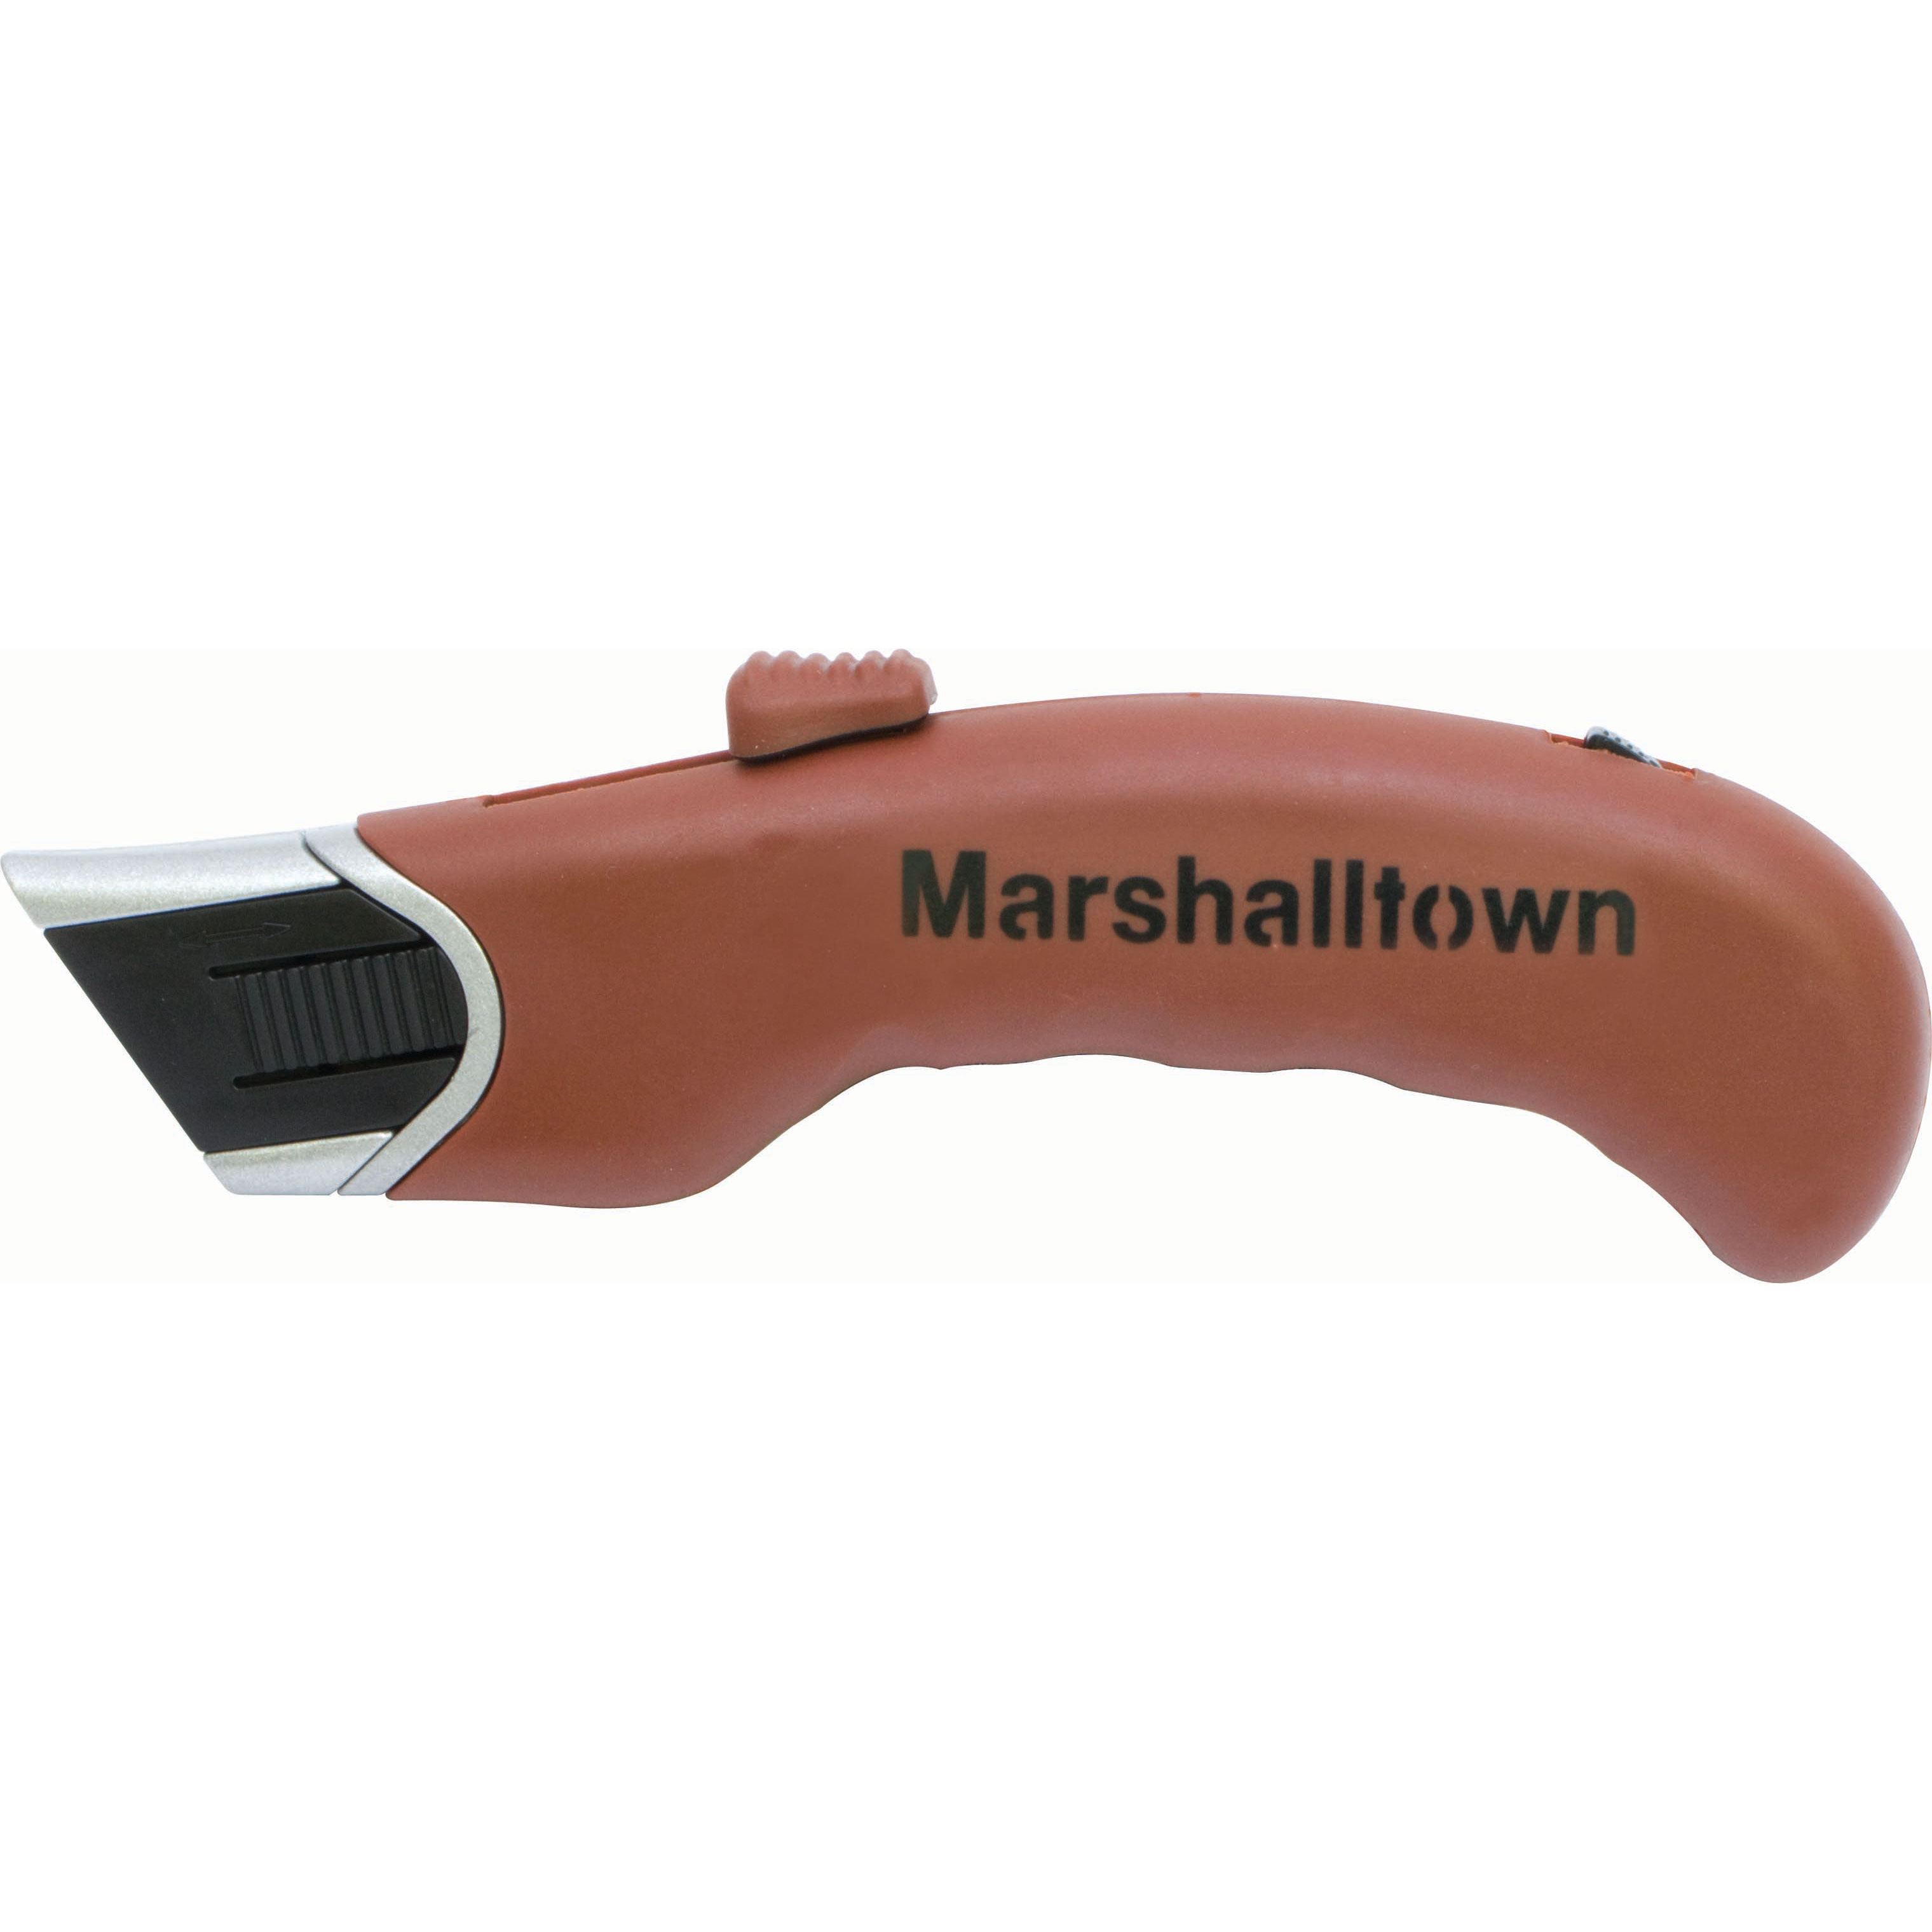 Marshalltown 9069 Auto Retractable Knife-DuraSoft MAT-9069